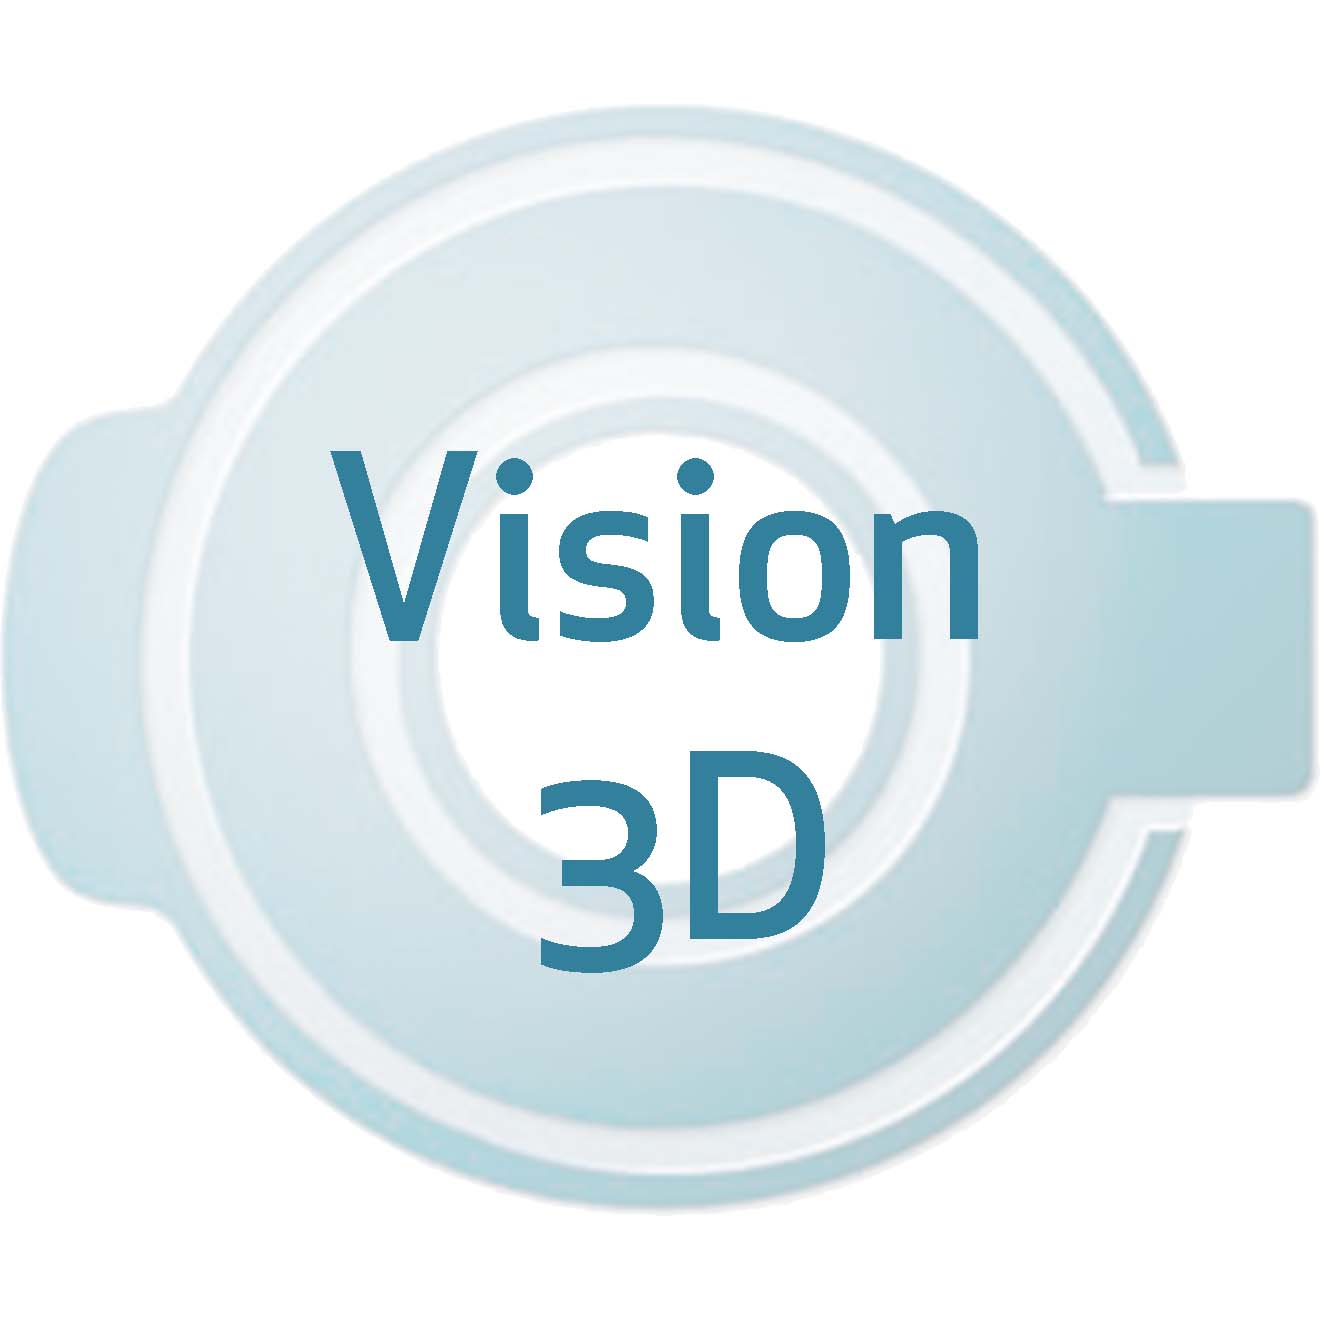 Vision 3D